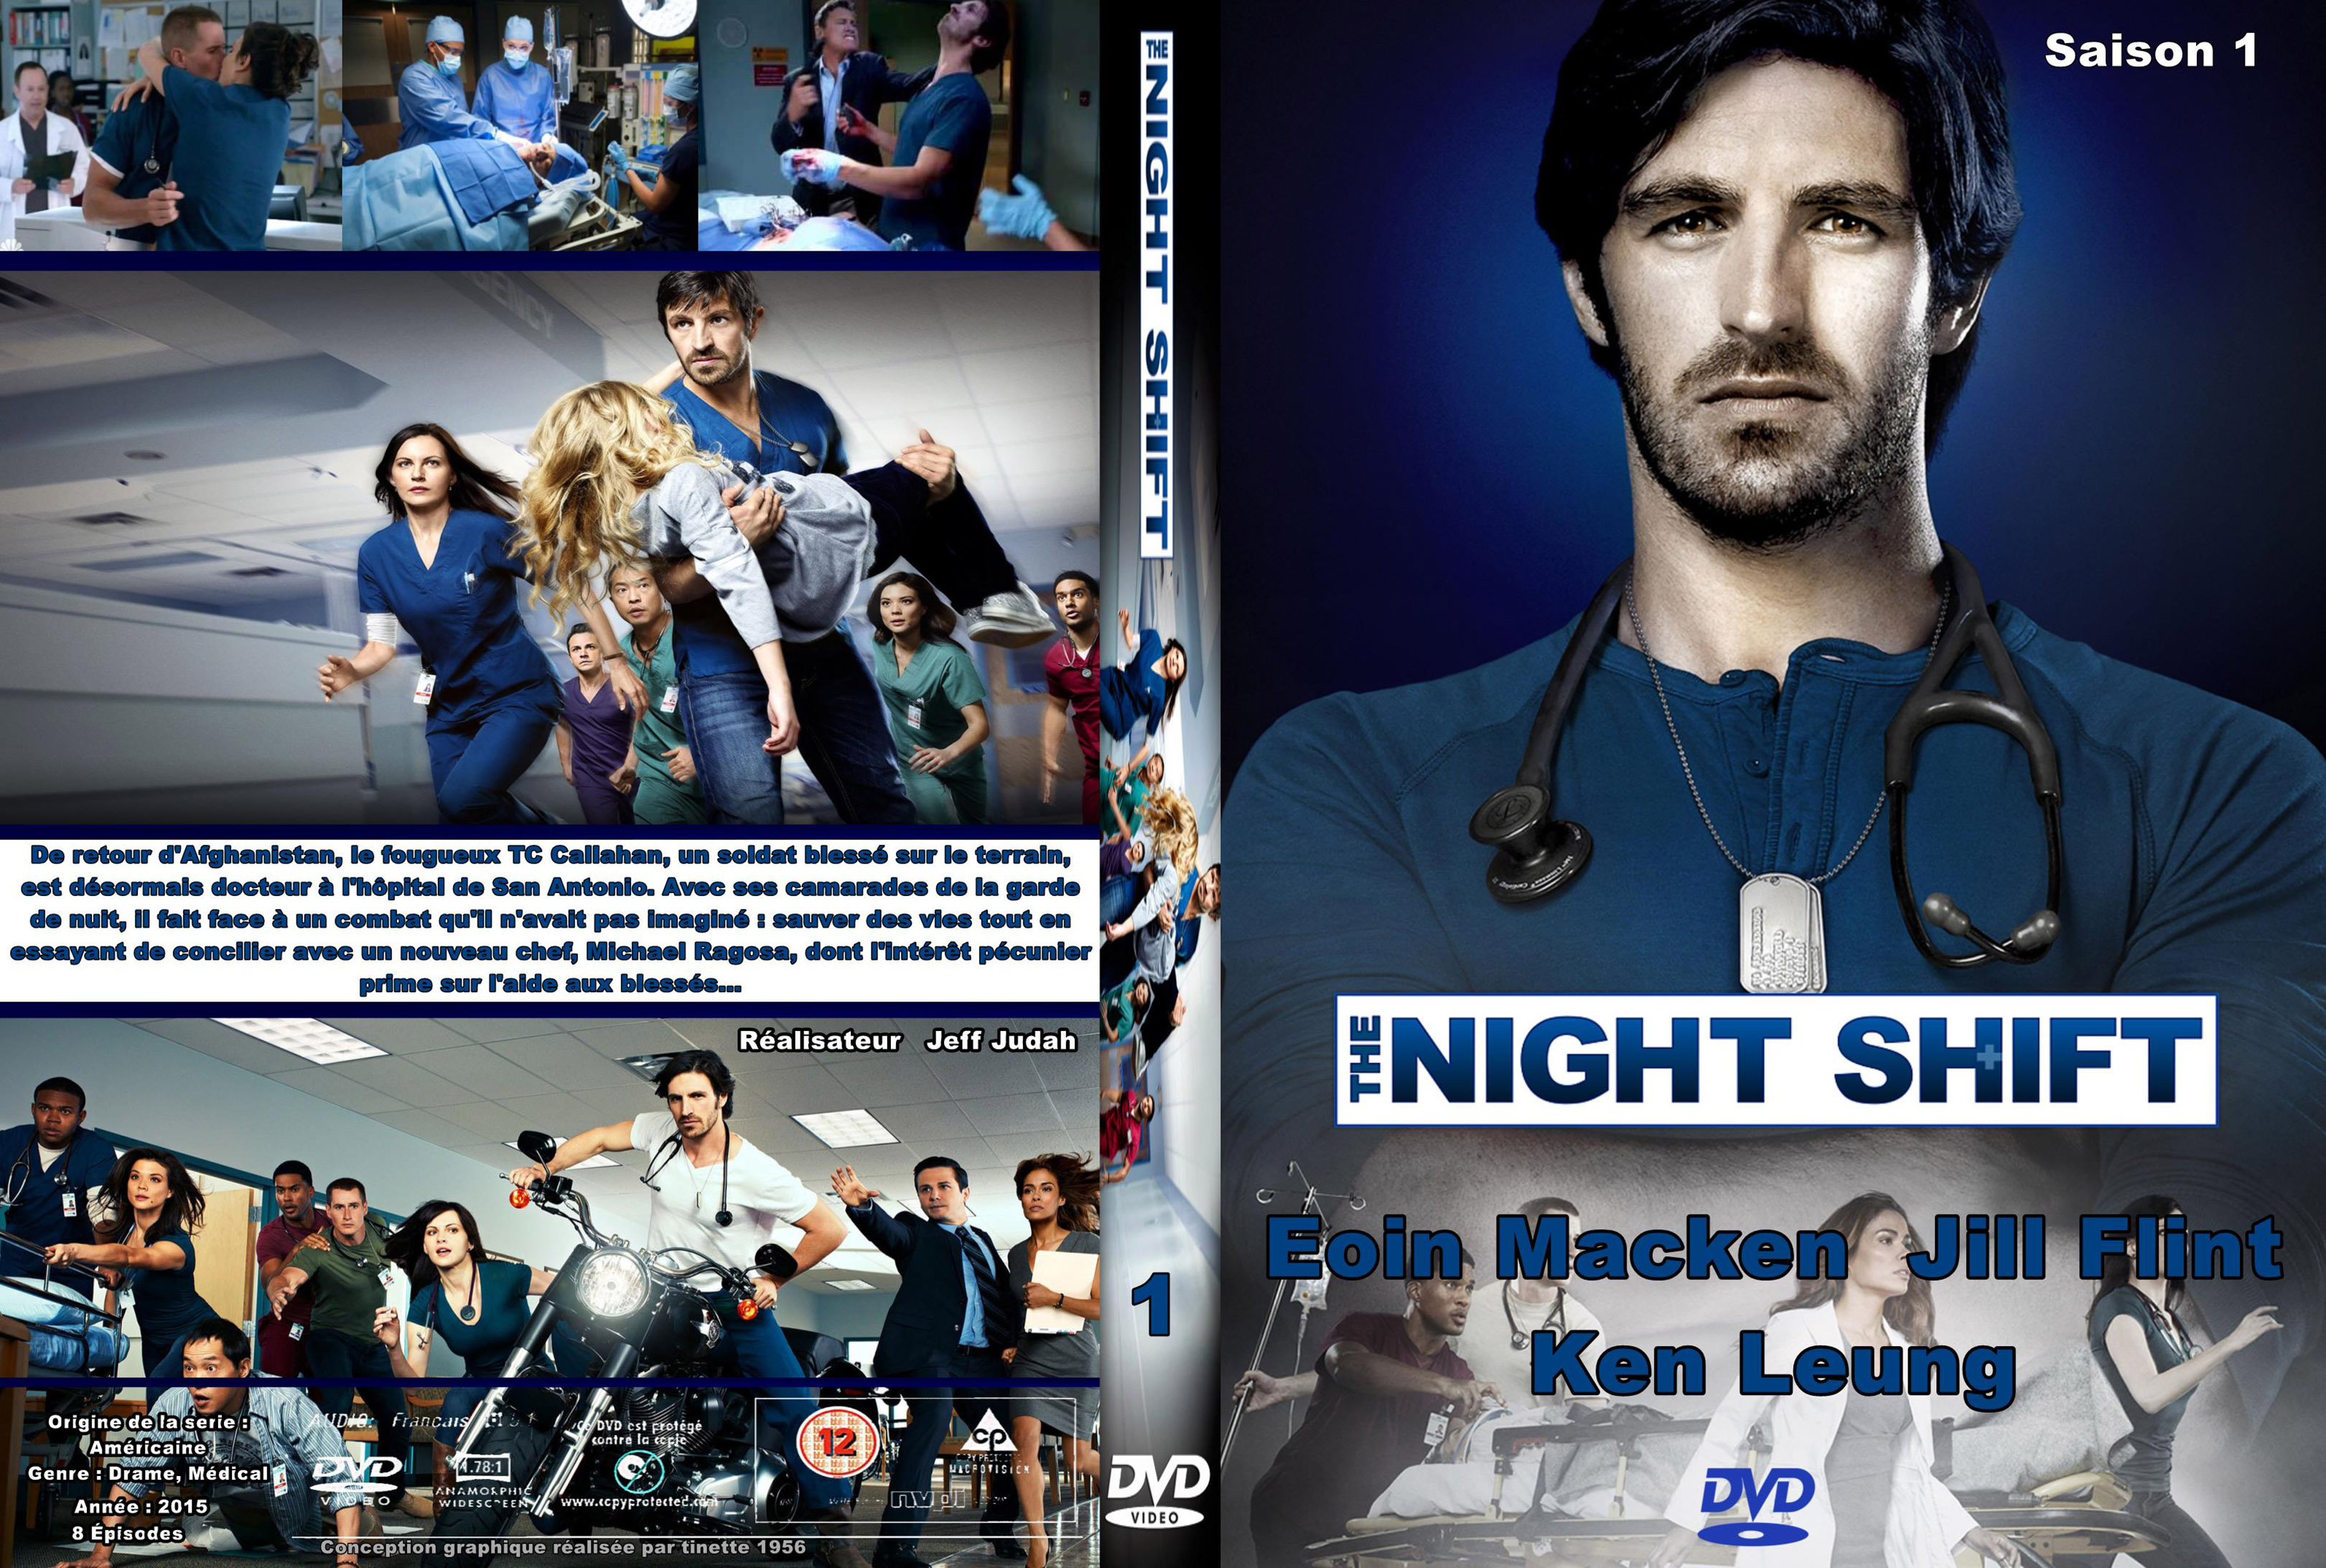 Jaquette DVD The night shift saison 1 custom